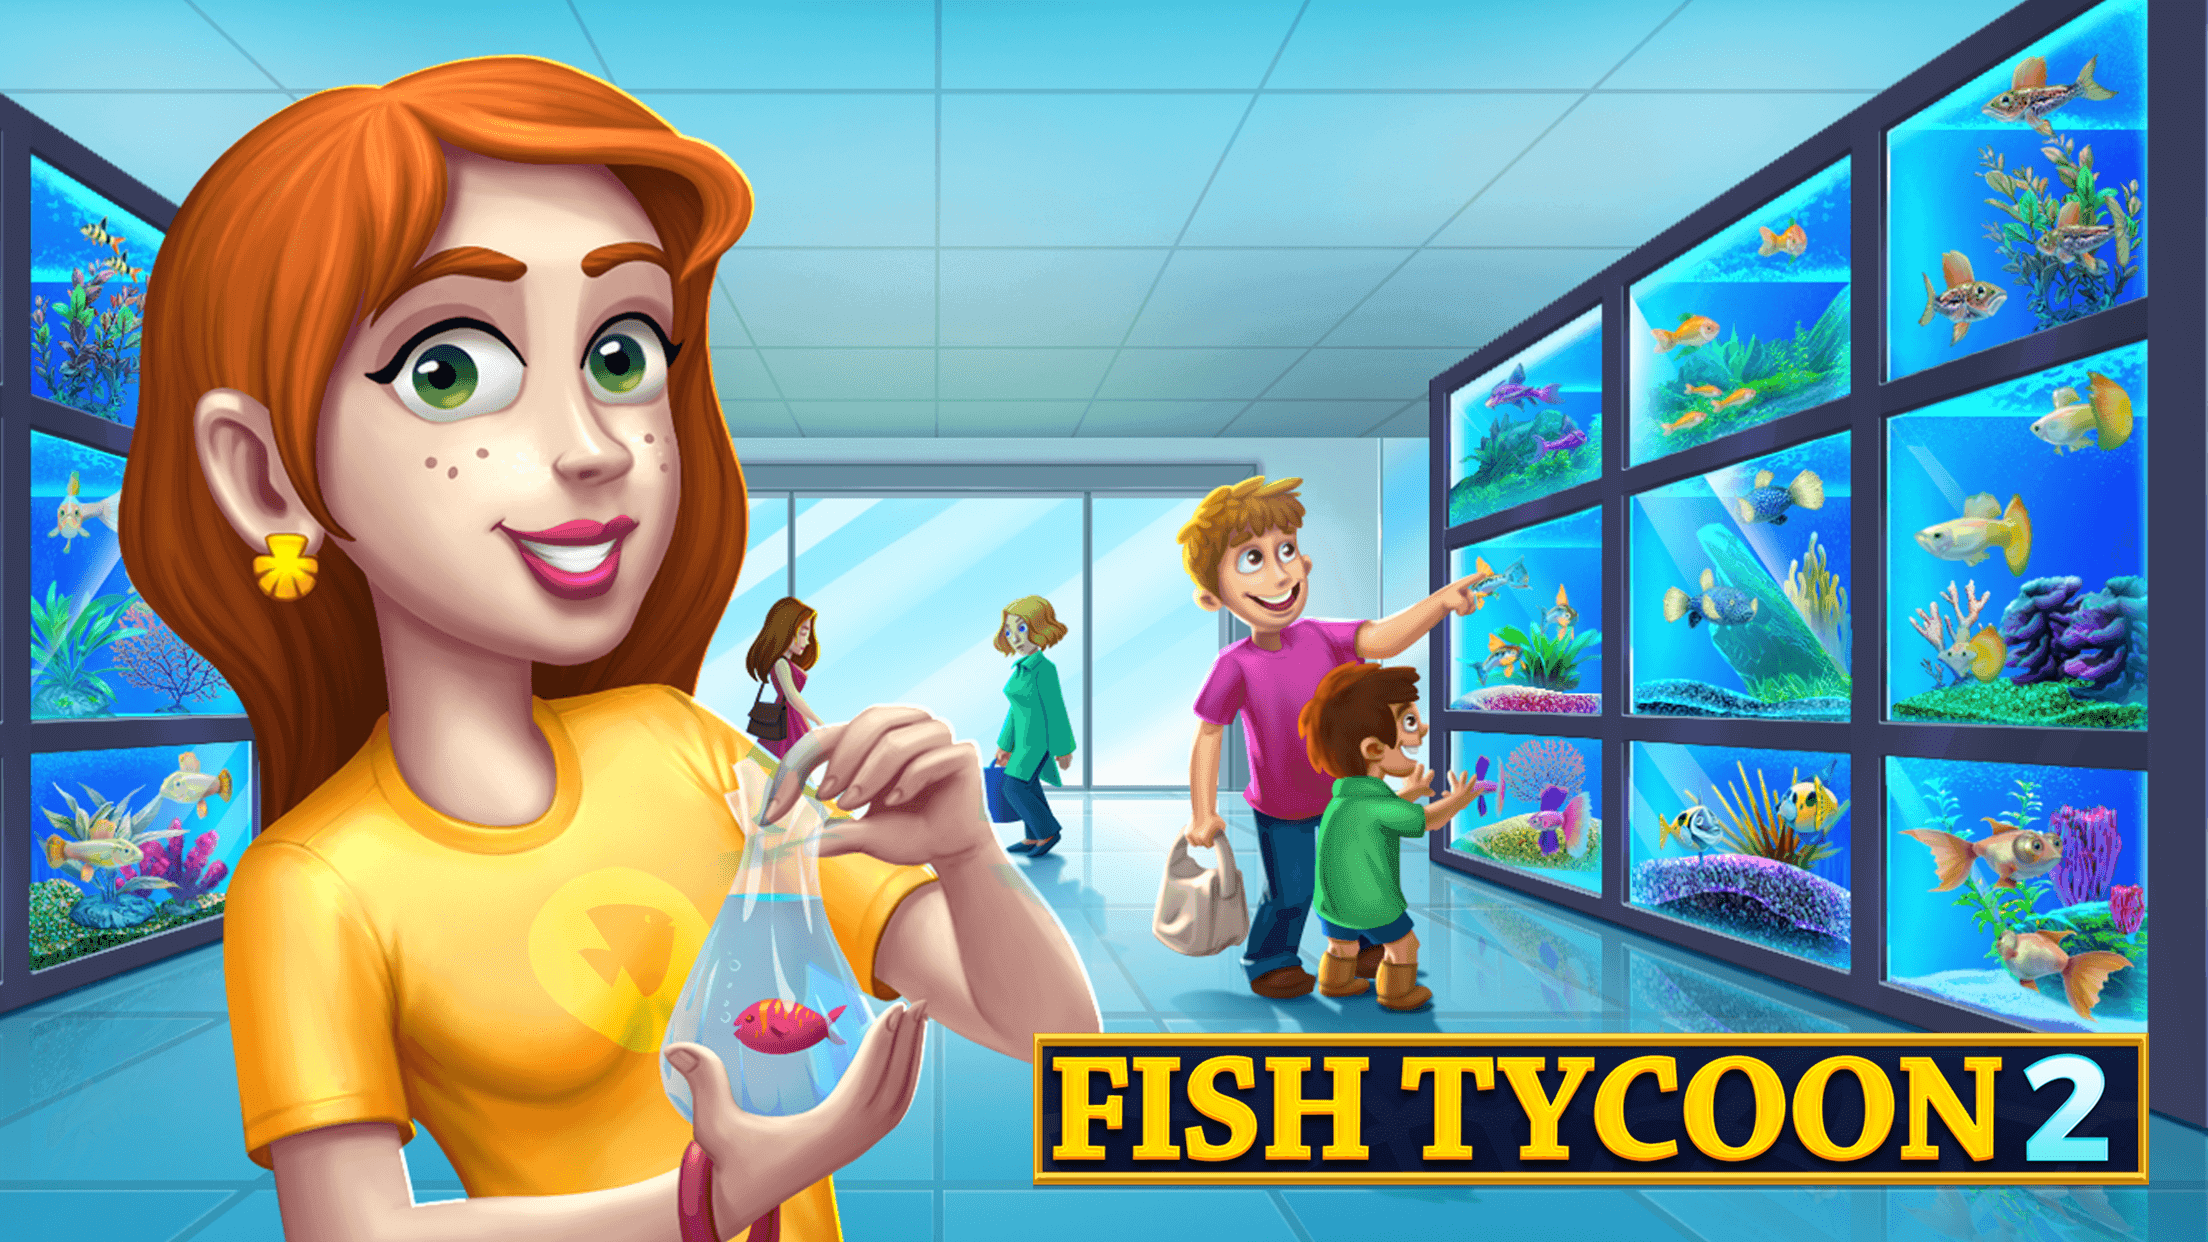 Screenshot 1 of Fish Tycoon 2 Acquario virtuale 1.10.169